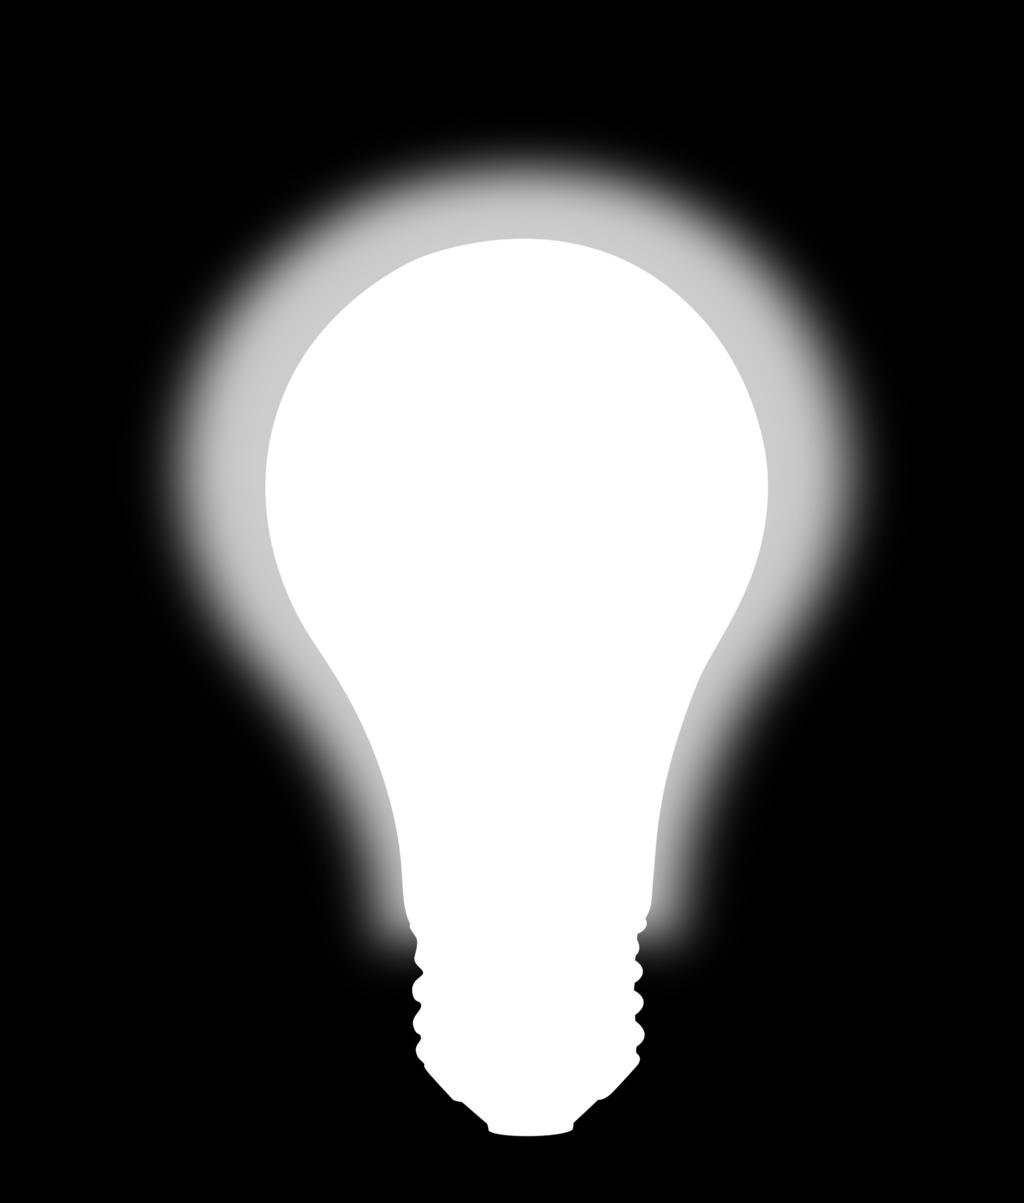 The outside of a 100-watt light bulb reaches about 477 F. Rigid foam melts at 300 F.